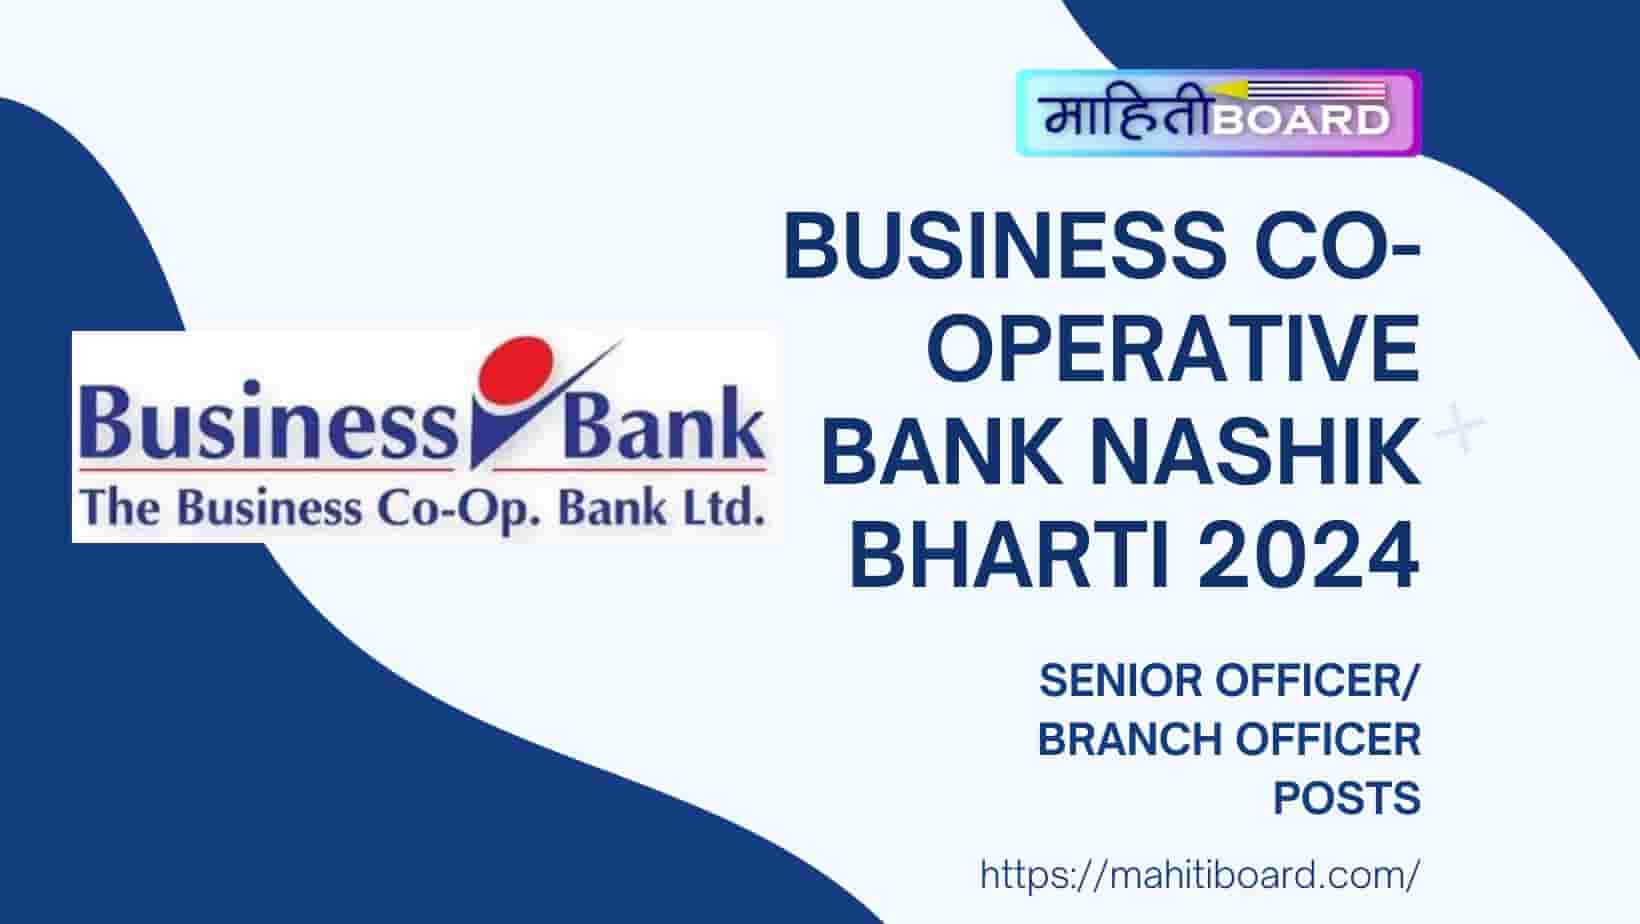 Business Co-Operative Bank Nashik Bharti 2024